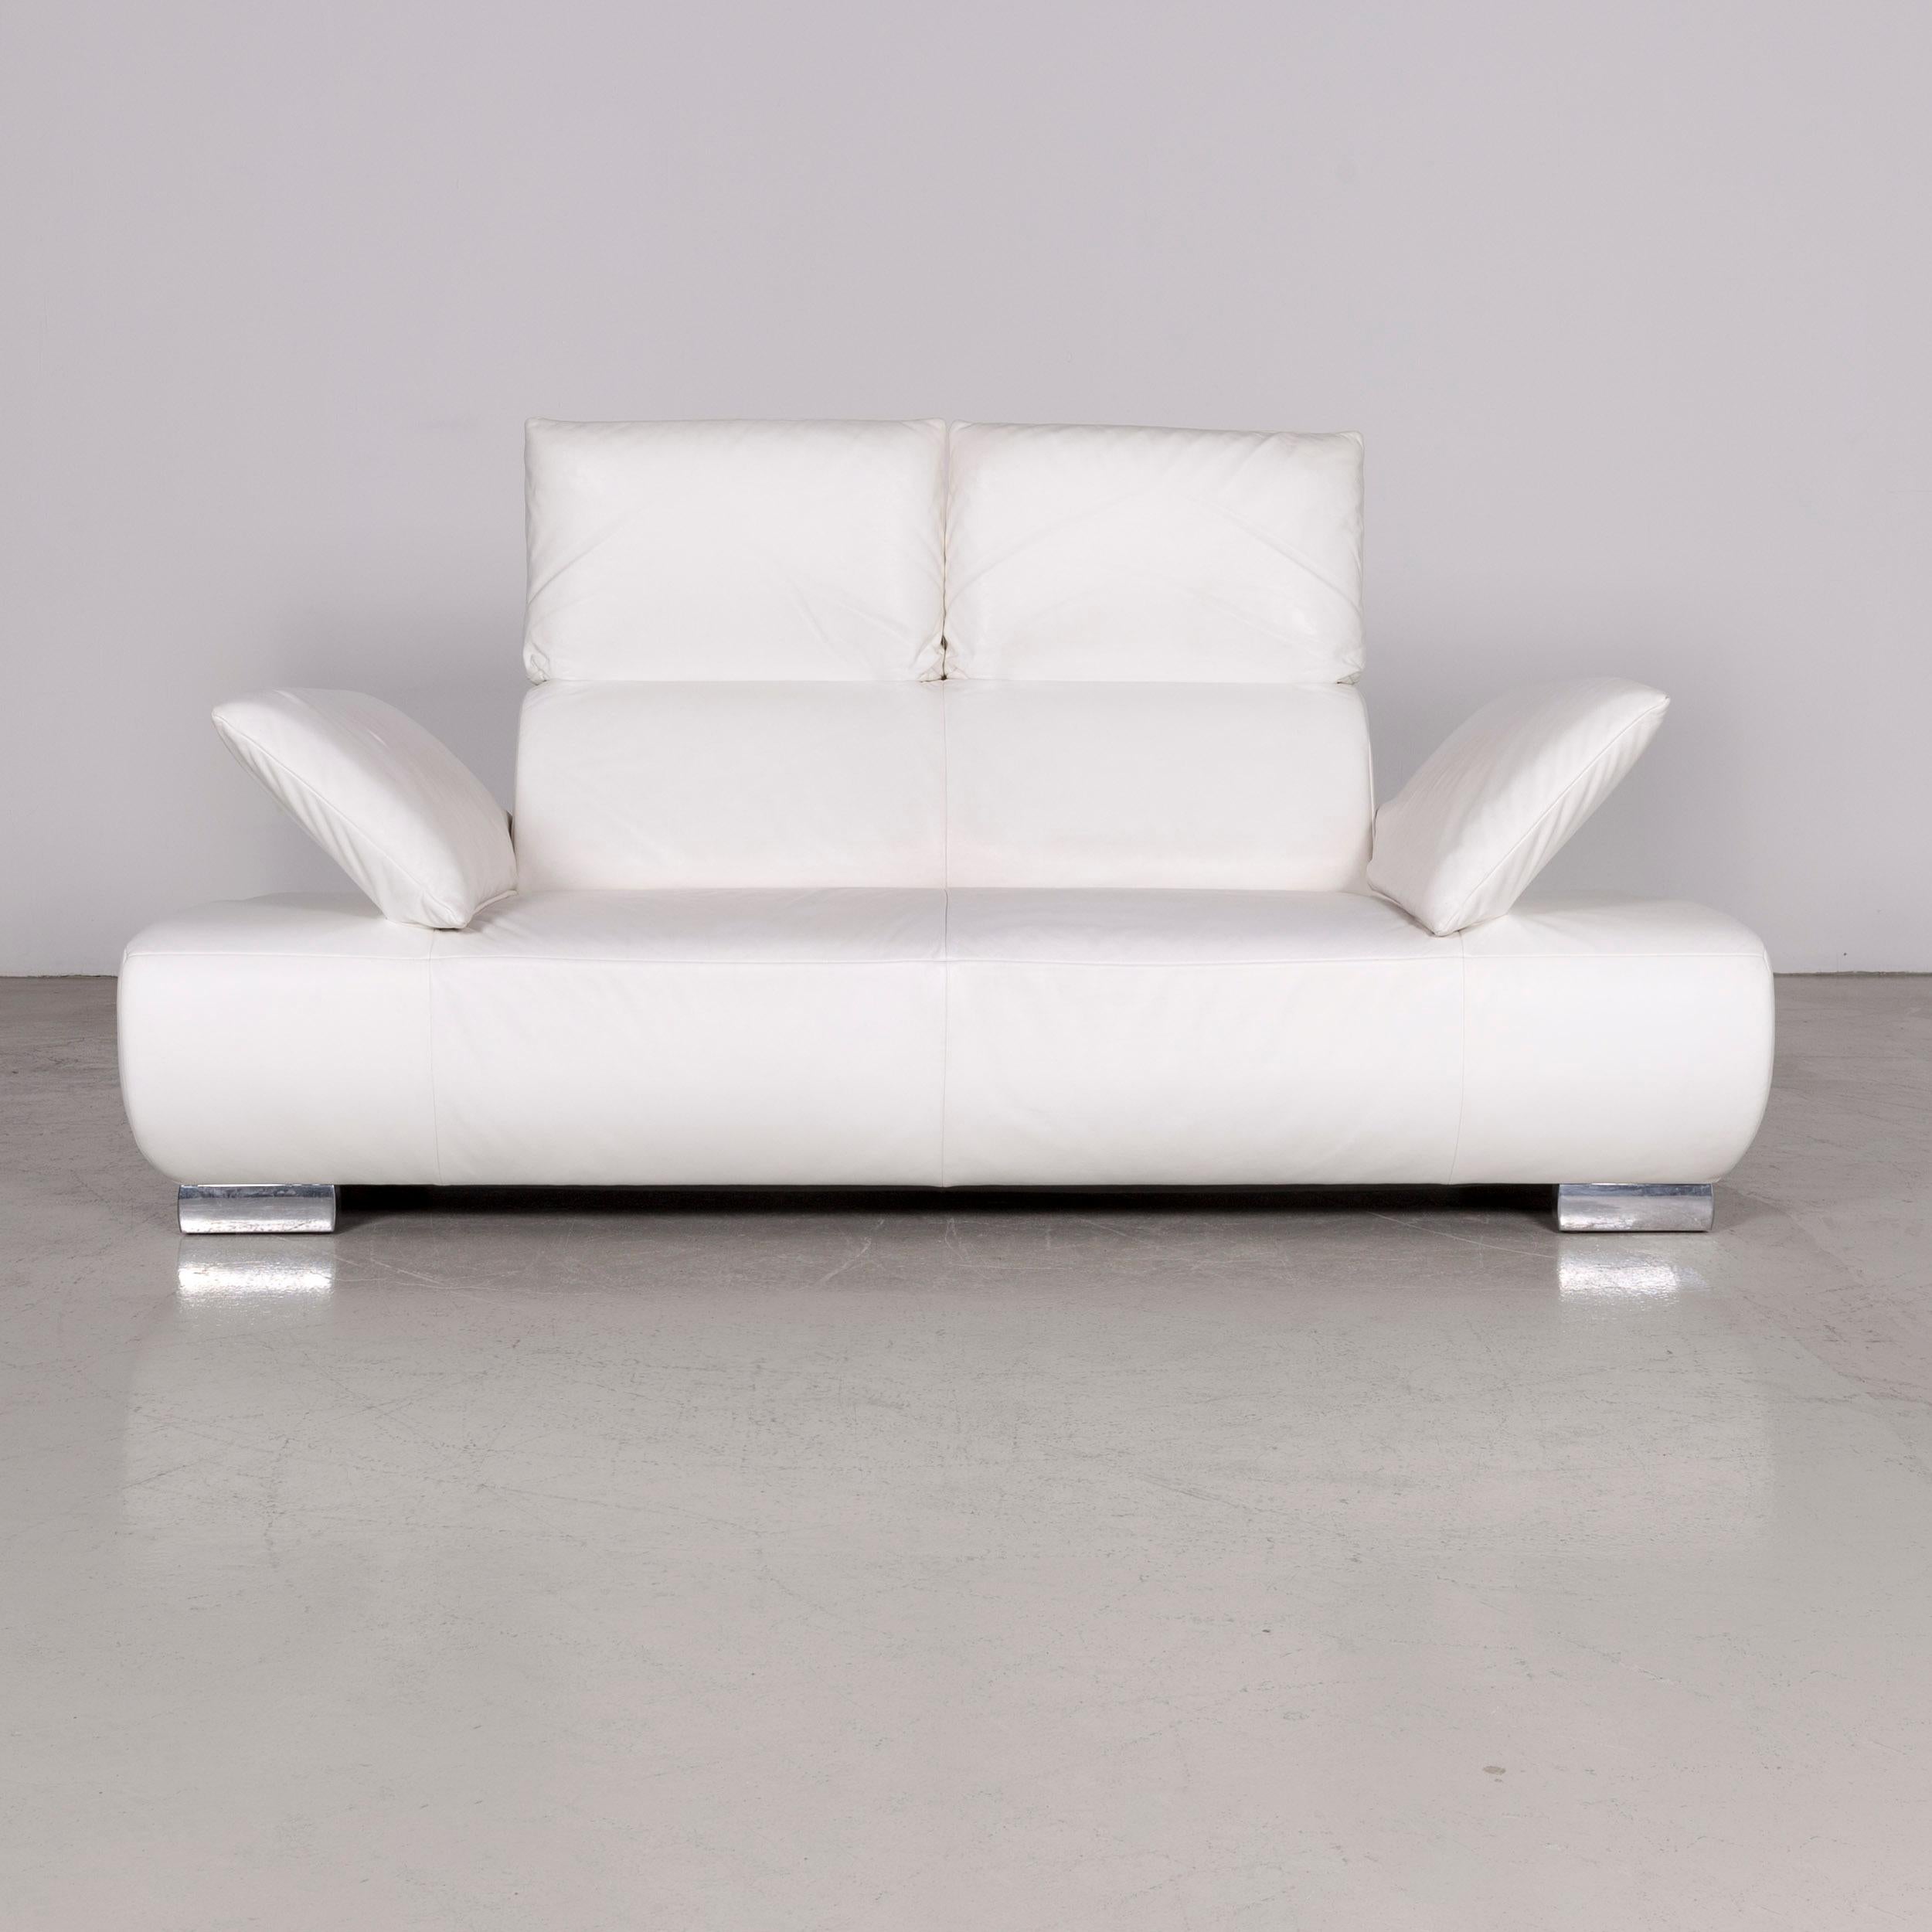 Koinor Volare Designer Leather Sofa White Two-Seat Couch In Good Condition For Sale In Cologne, DE